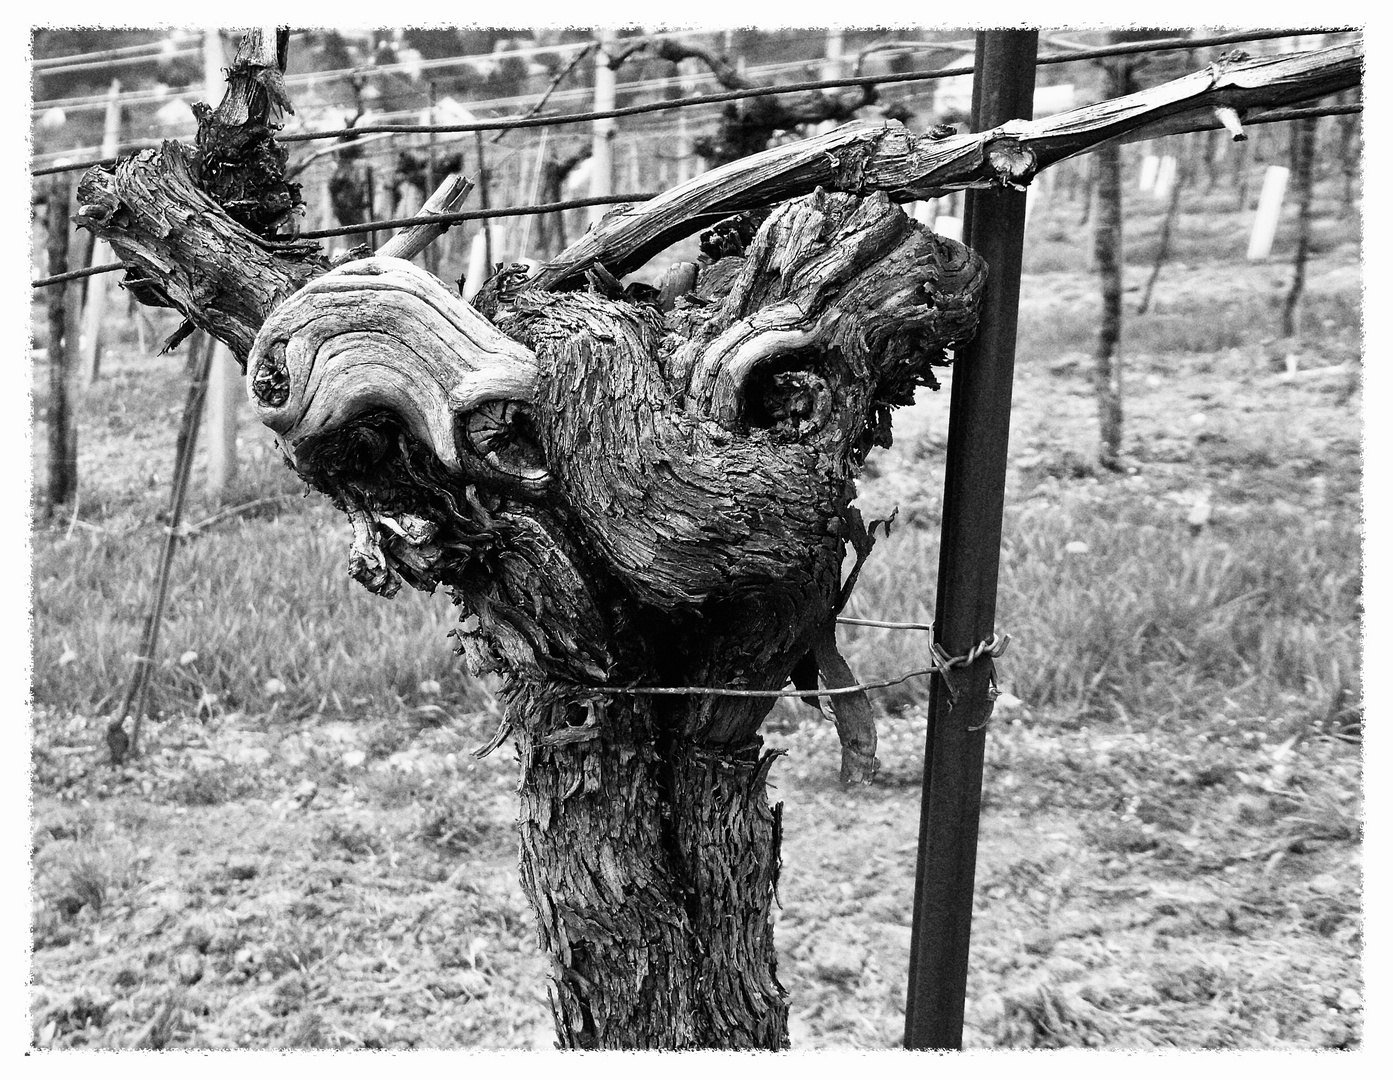 greetings from good old vineyard